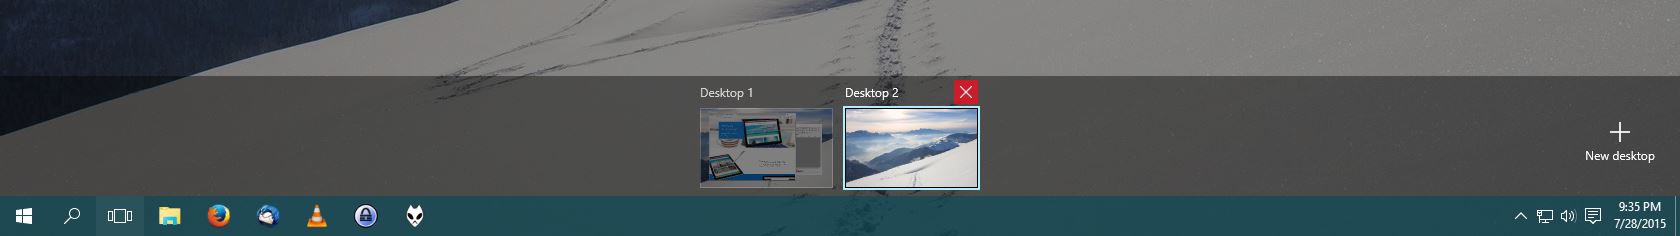 Virtual Desktop 2